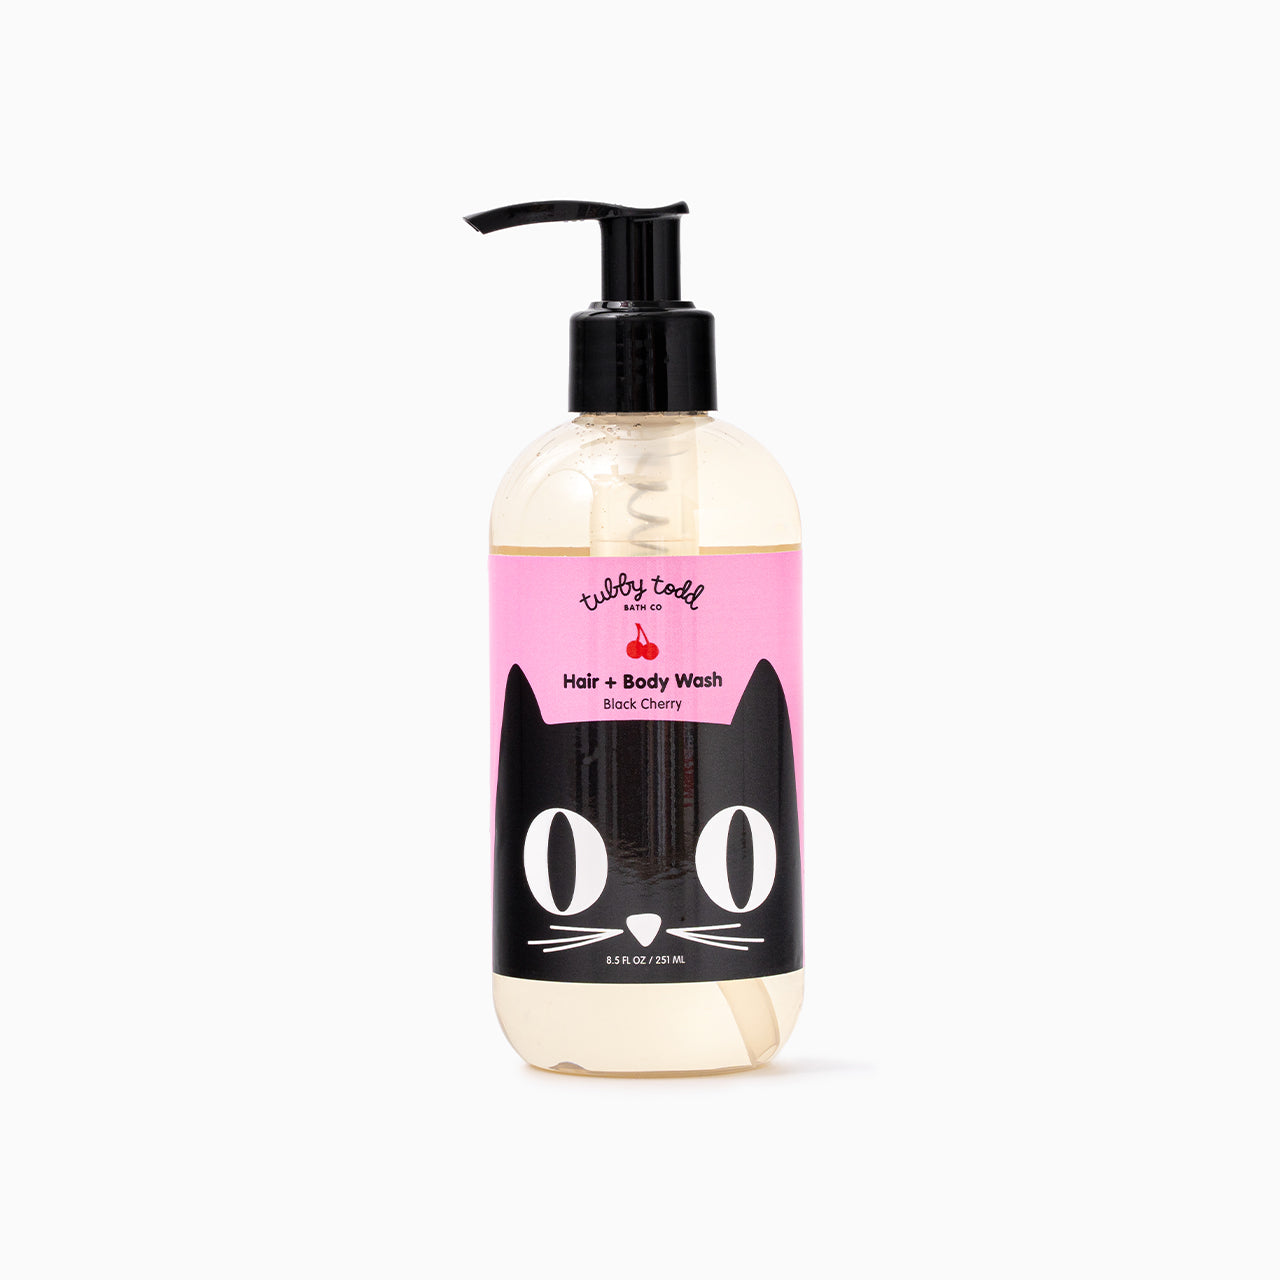 8.5oz Black Cherry Hair + Body Wash bottle standing on the white background.